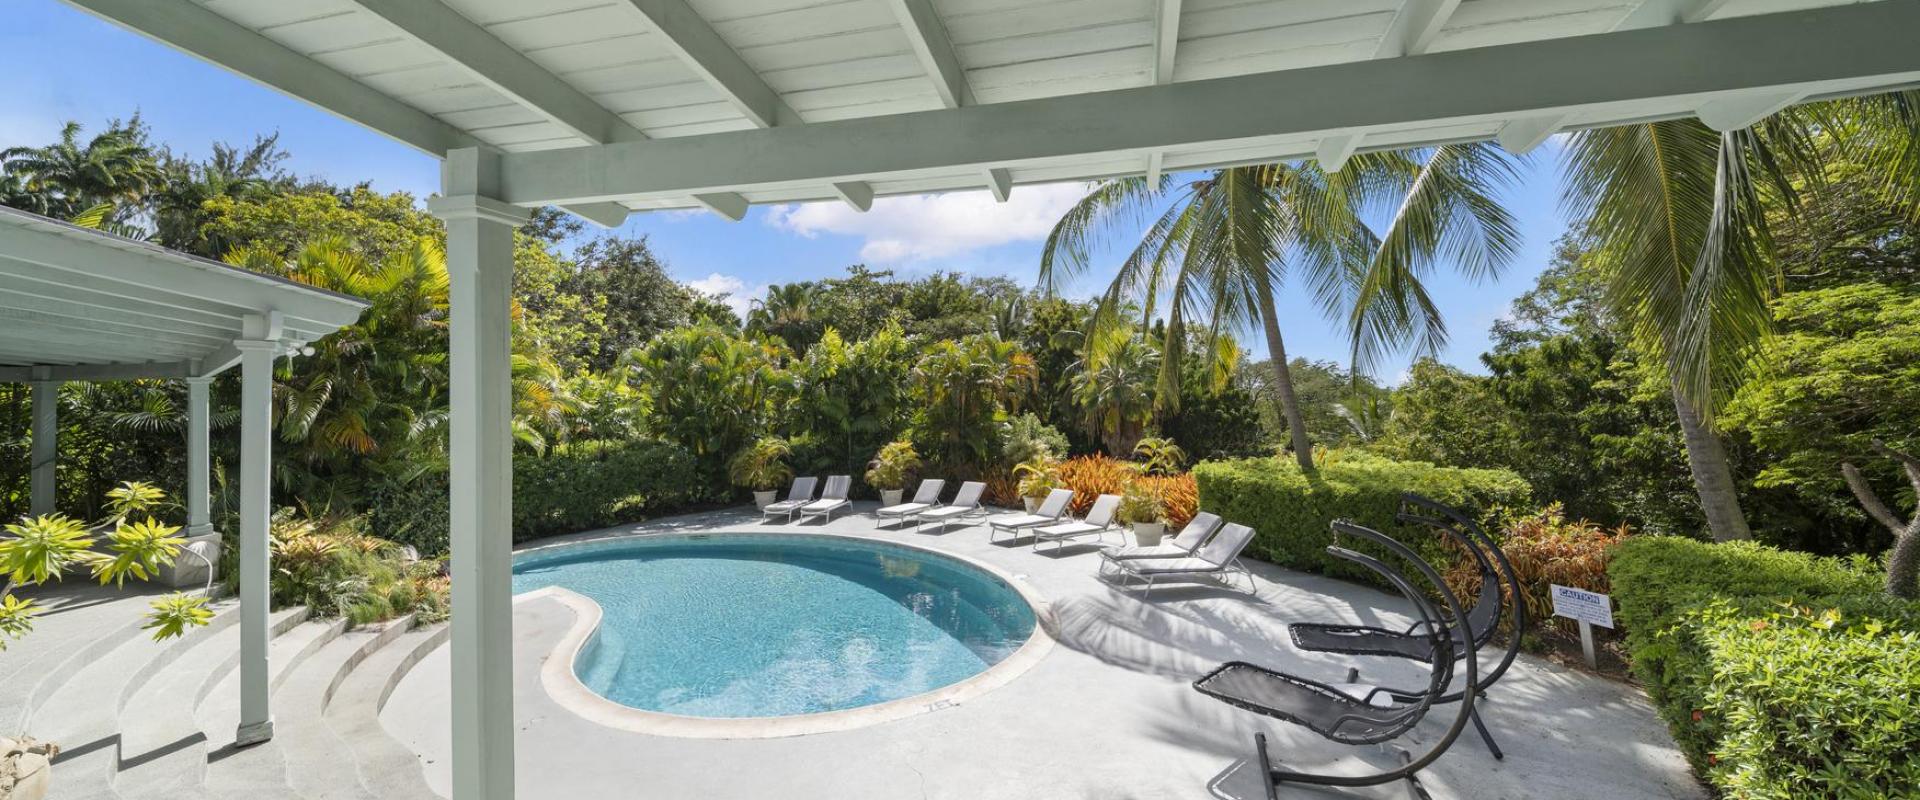 Phoenix Villa Sandy Lane Barbados Pool Deck and Garden View